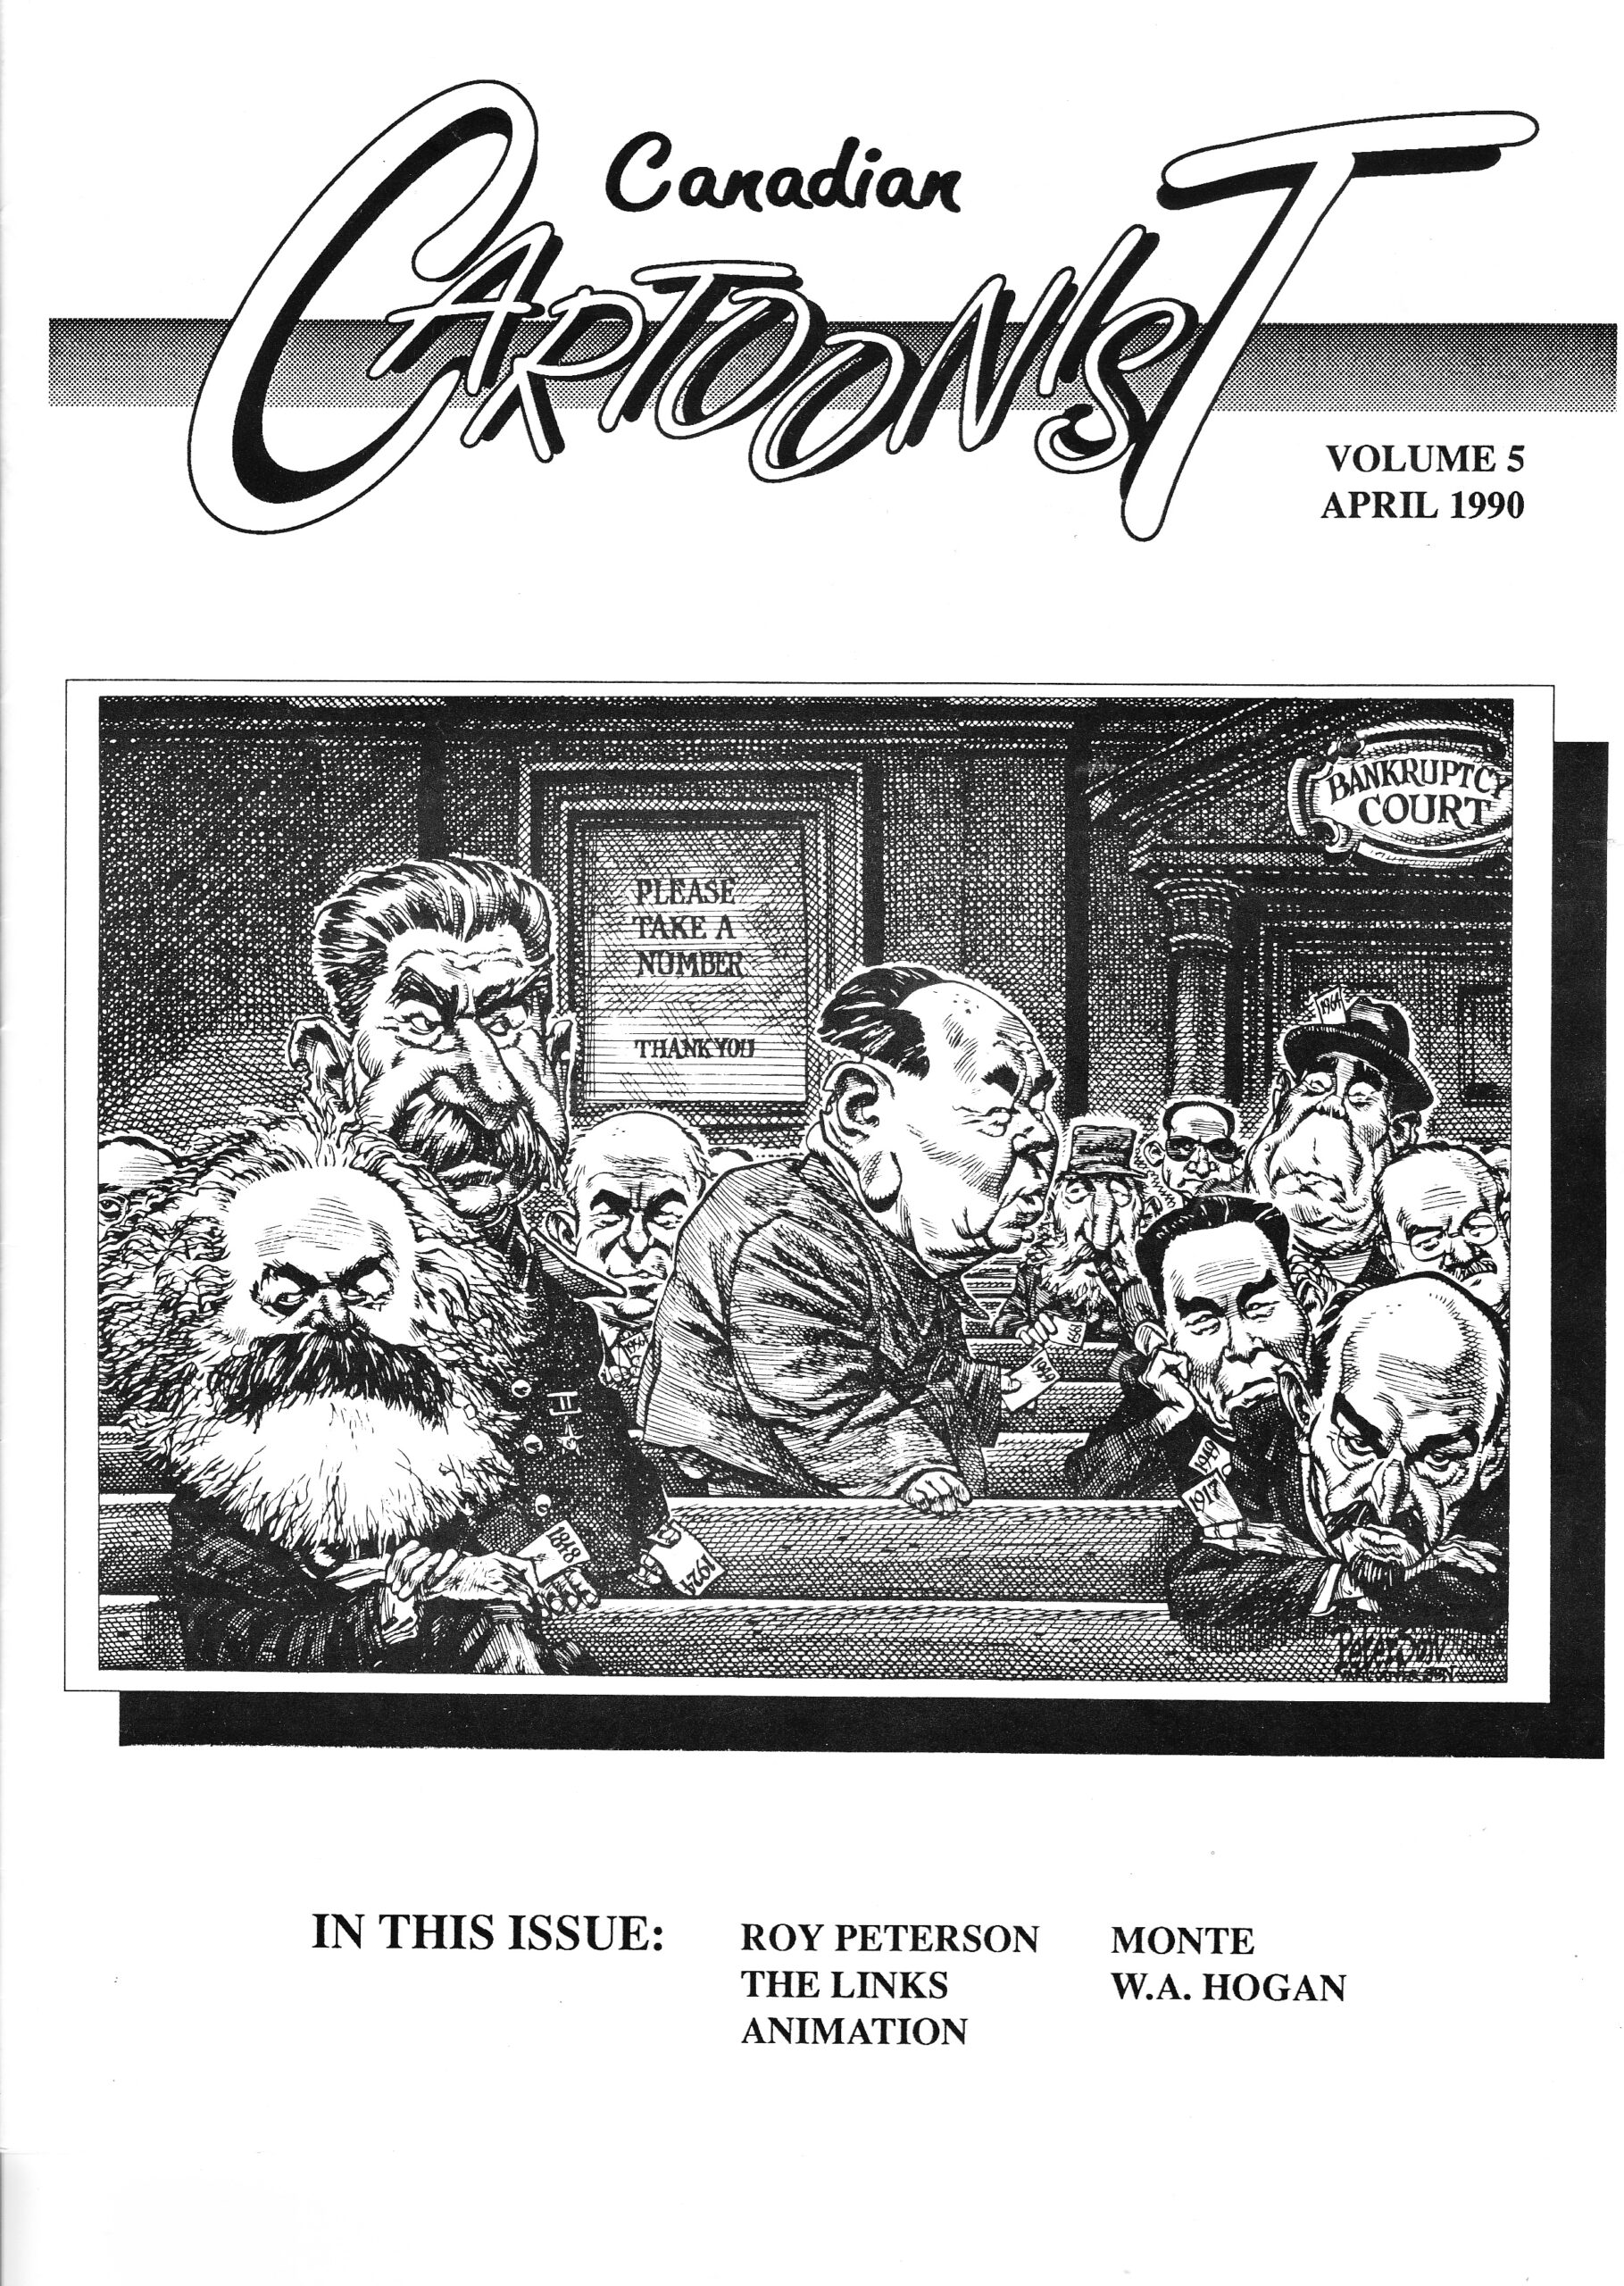 C:\Users\Robert\Documents\CARTOONING ILLUSTRATION ANIMATION\IMAGE COVER PERIODICAL\CANADIAN CARTOONIST, 5, April 1990, fc.jpg